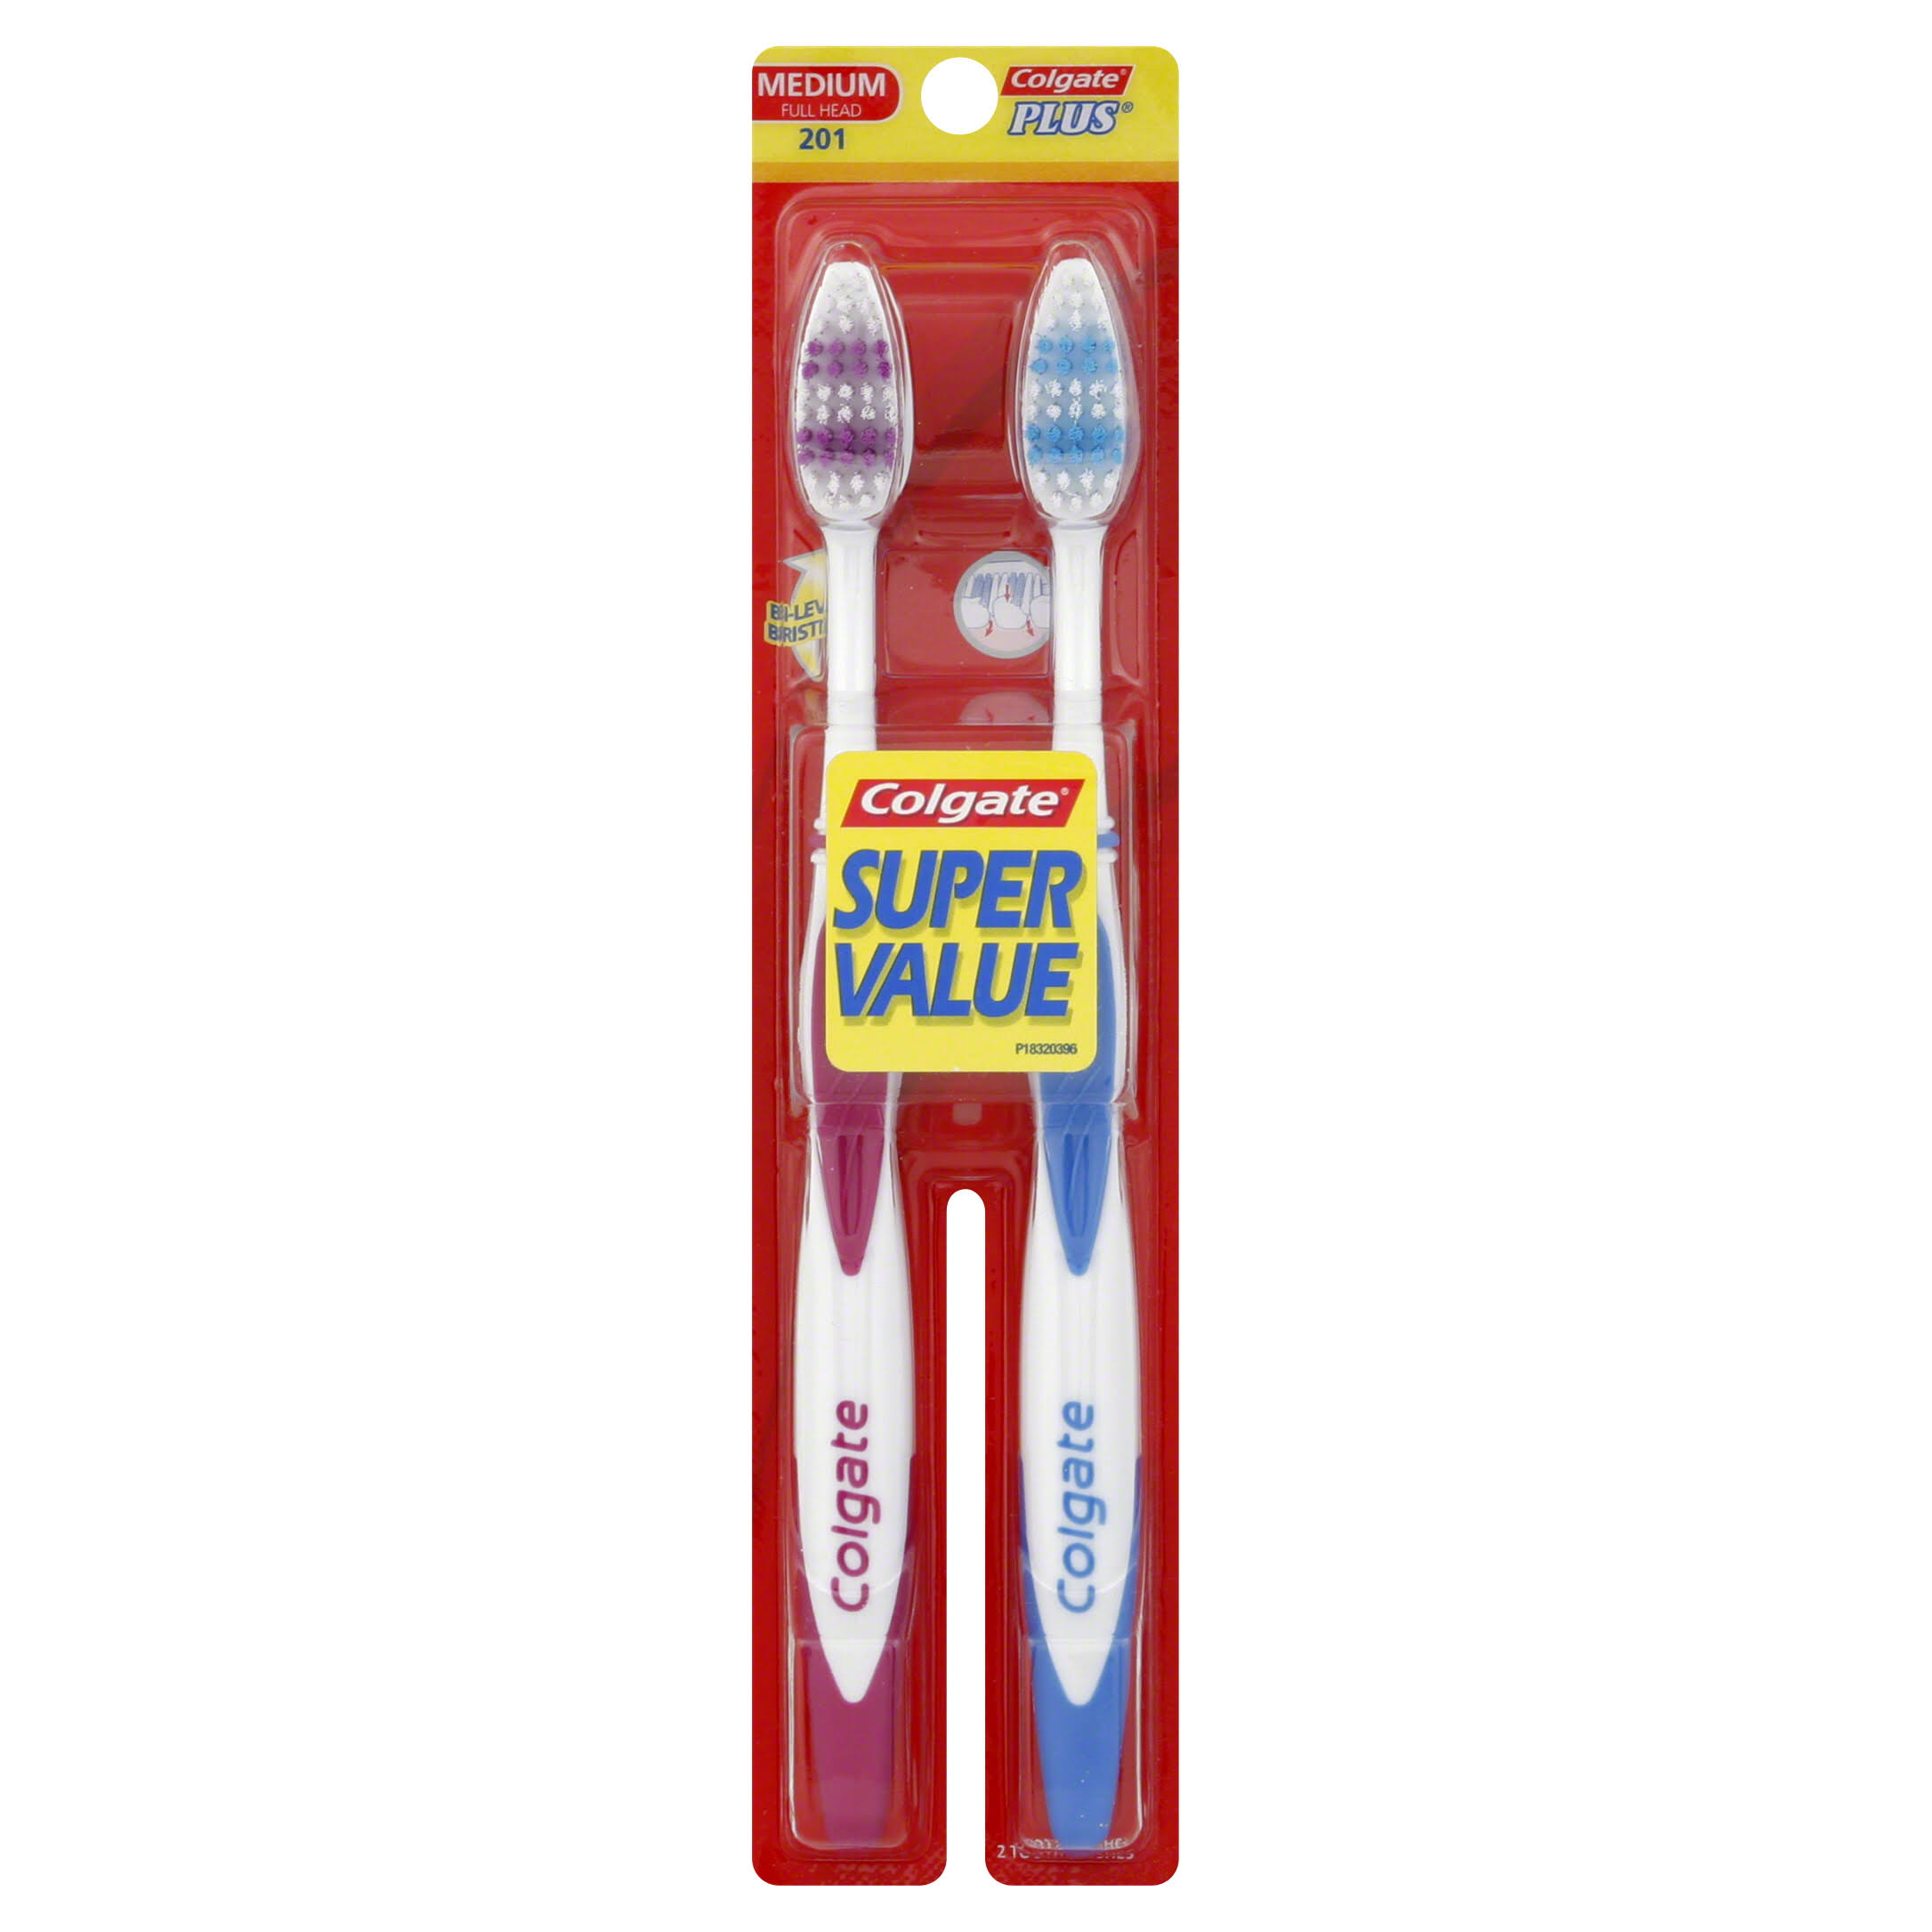 Colgate Plus Toothbrush - Twin Pack